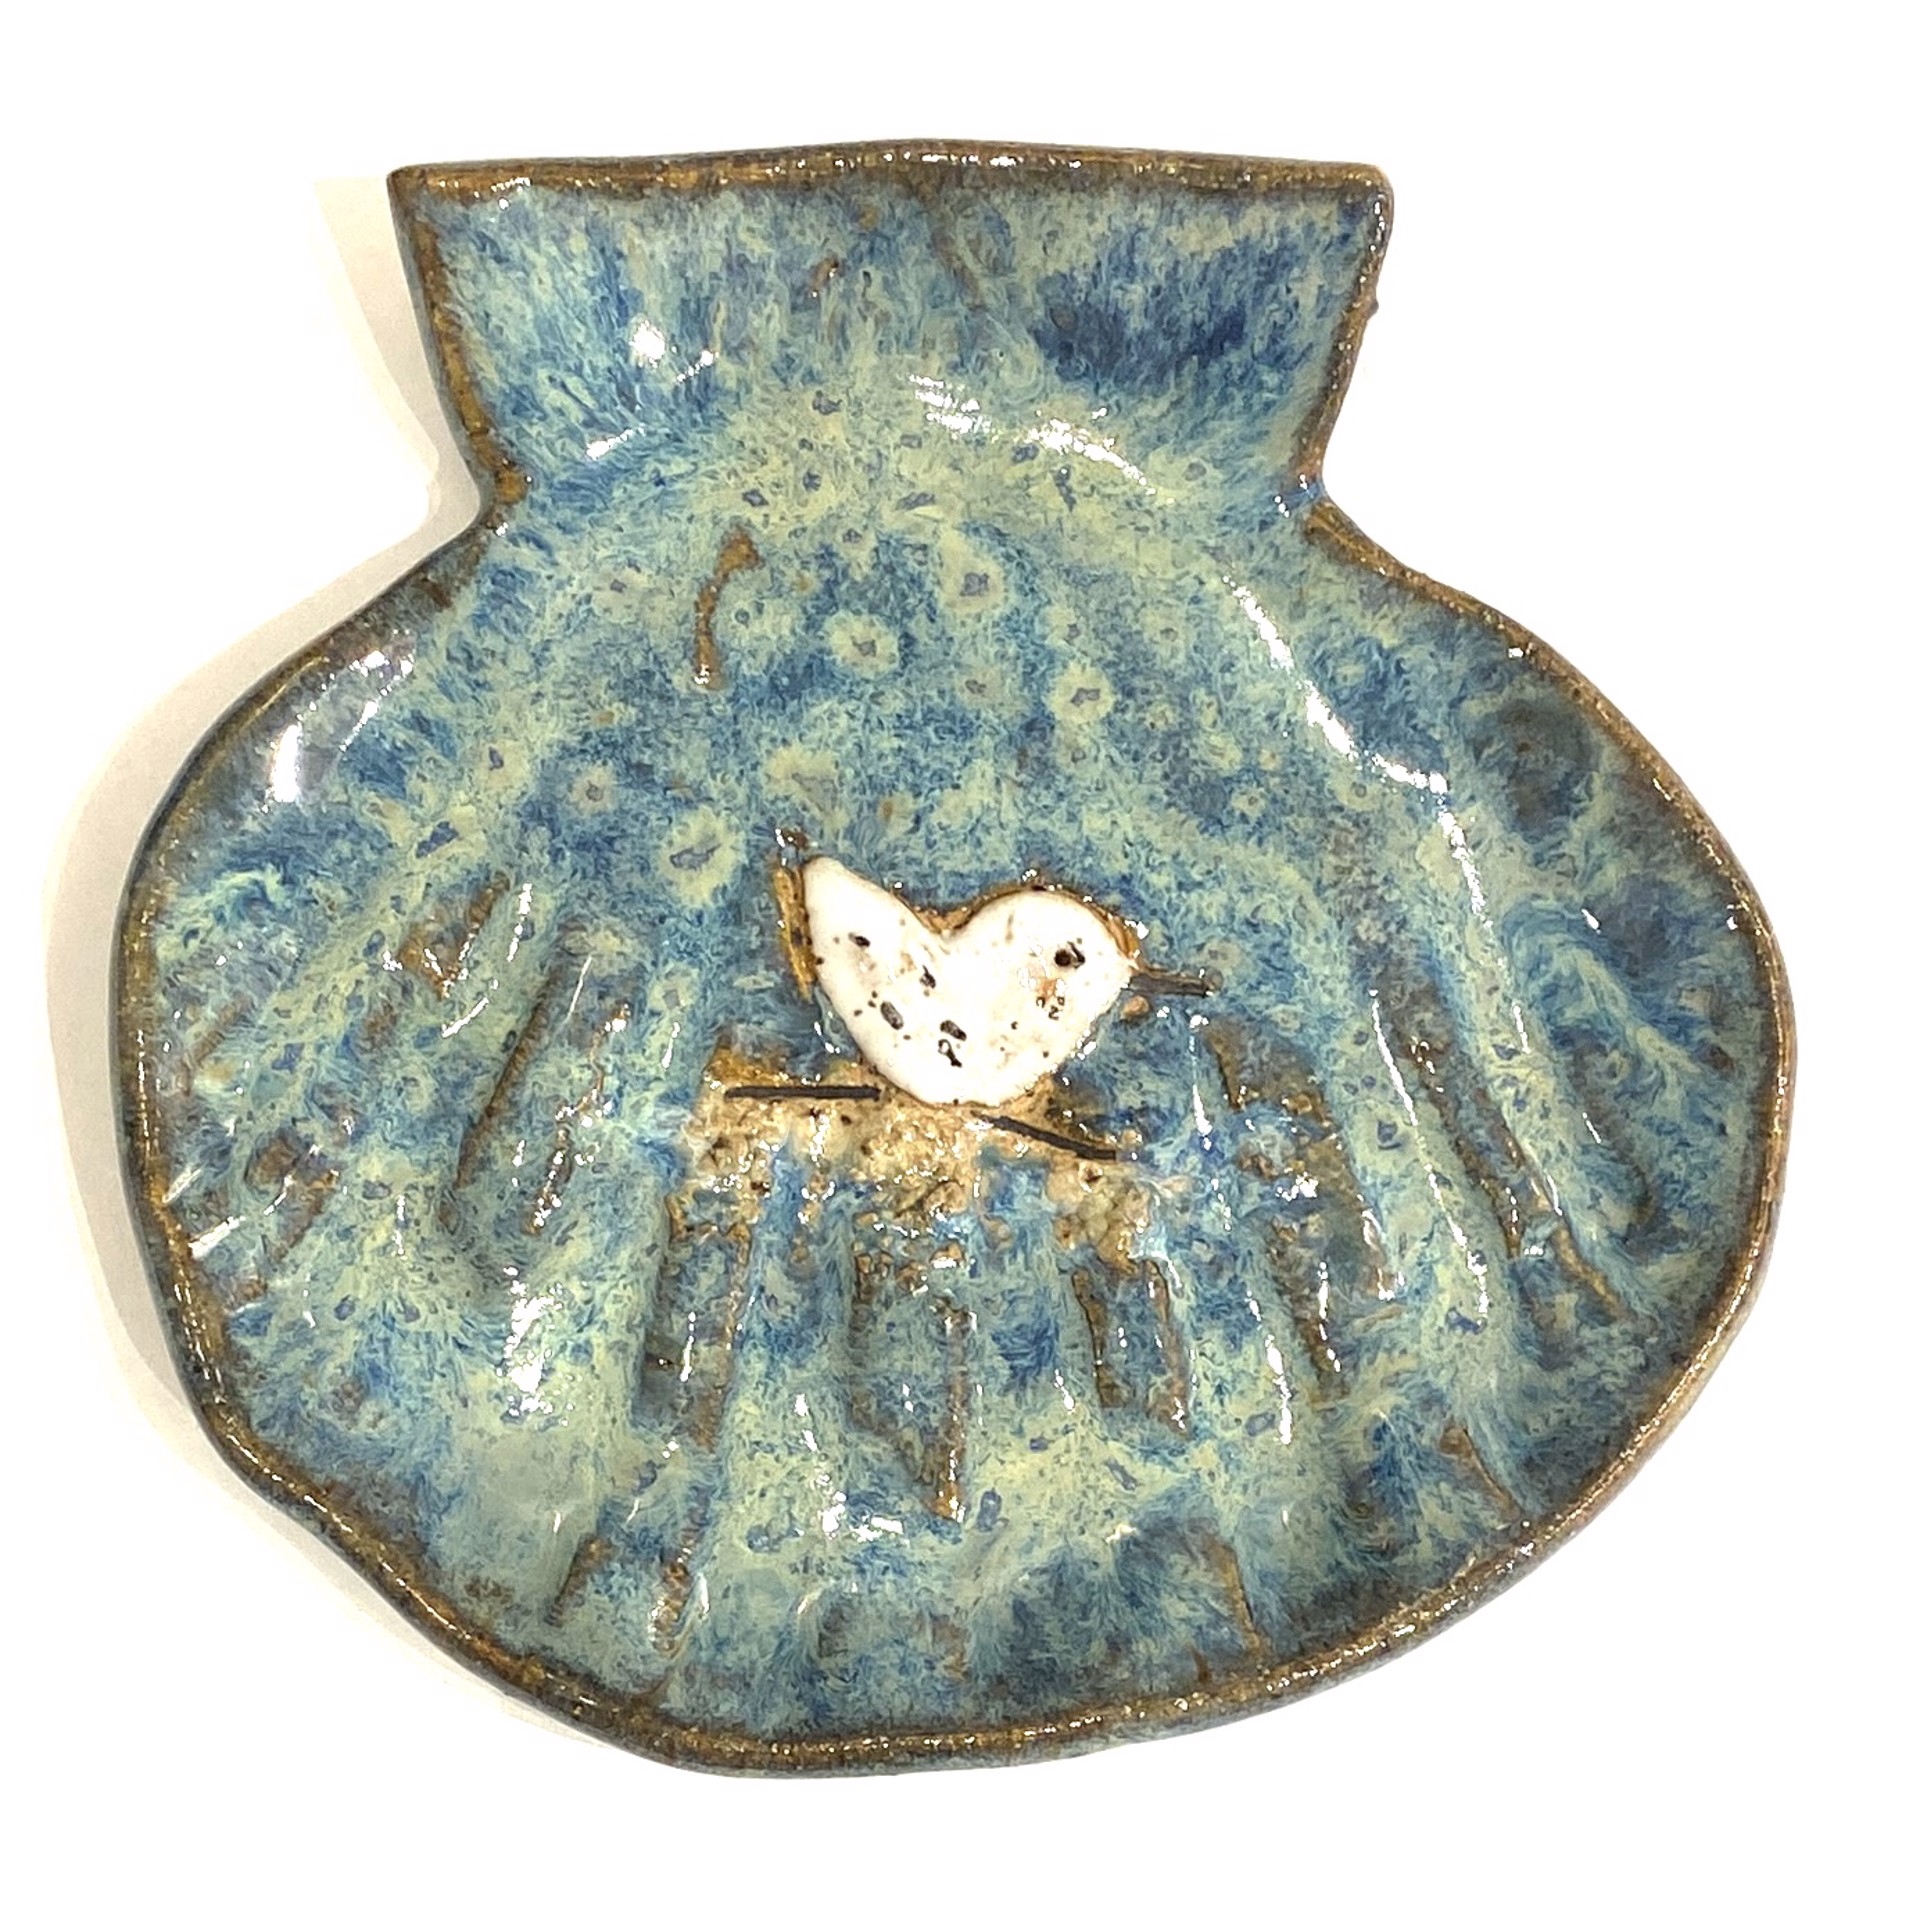 Shell Dish with Sandpiper (Blue Glaze) LG23-1048 by Jim & Steffi Logan